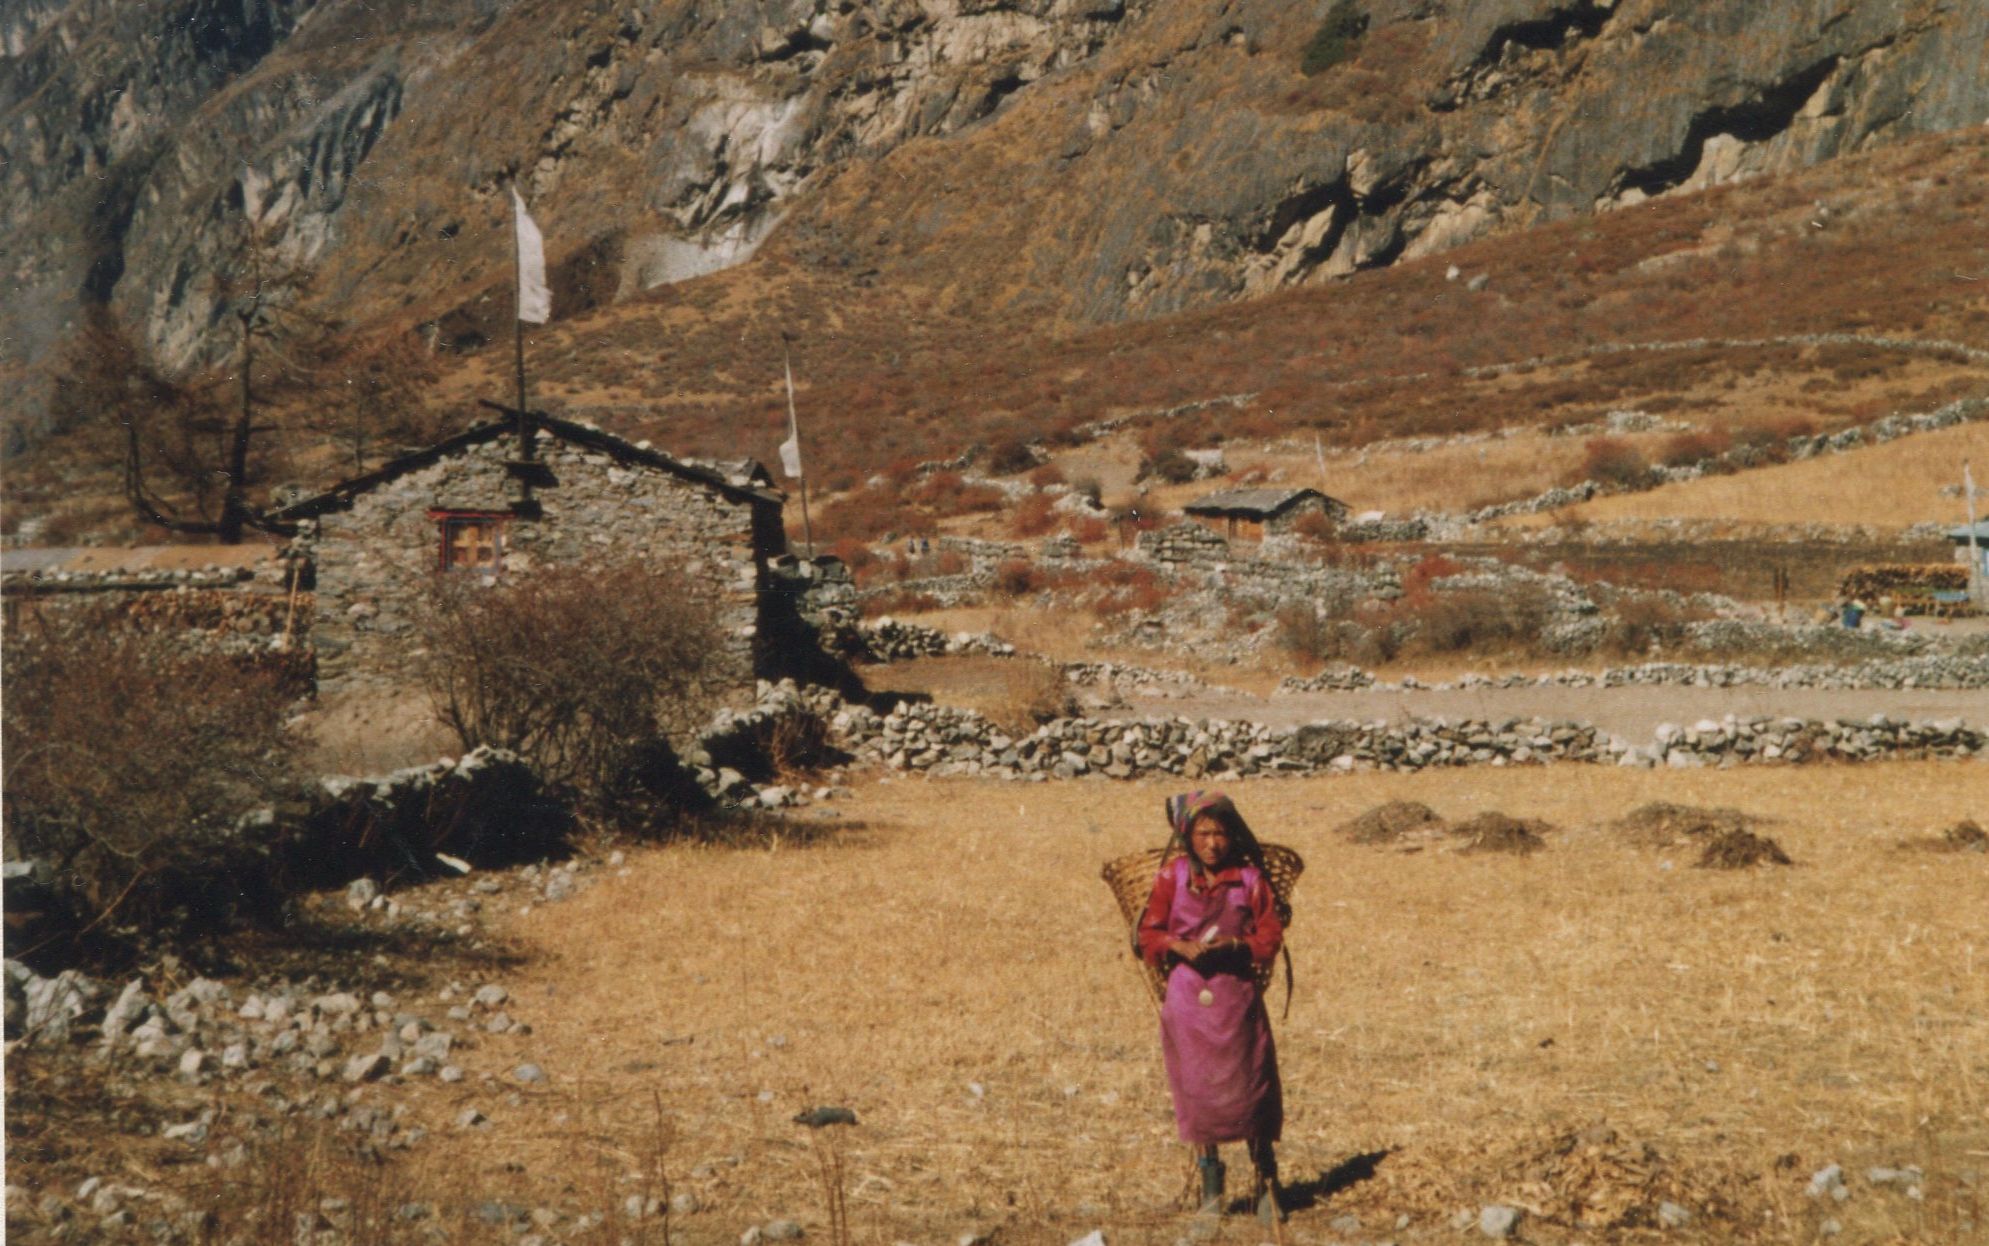 Sherpani ( Sherpa girl / woman ) in Langtang Valley of the Nepal Himalaya